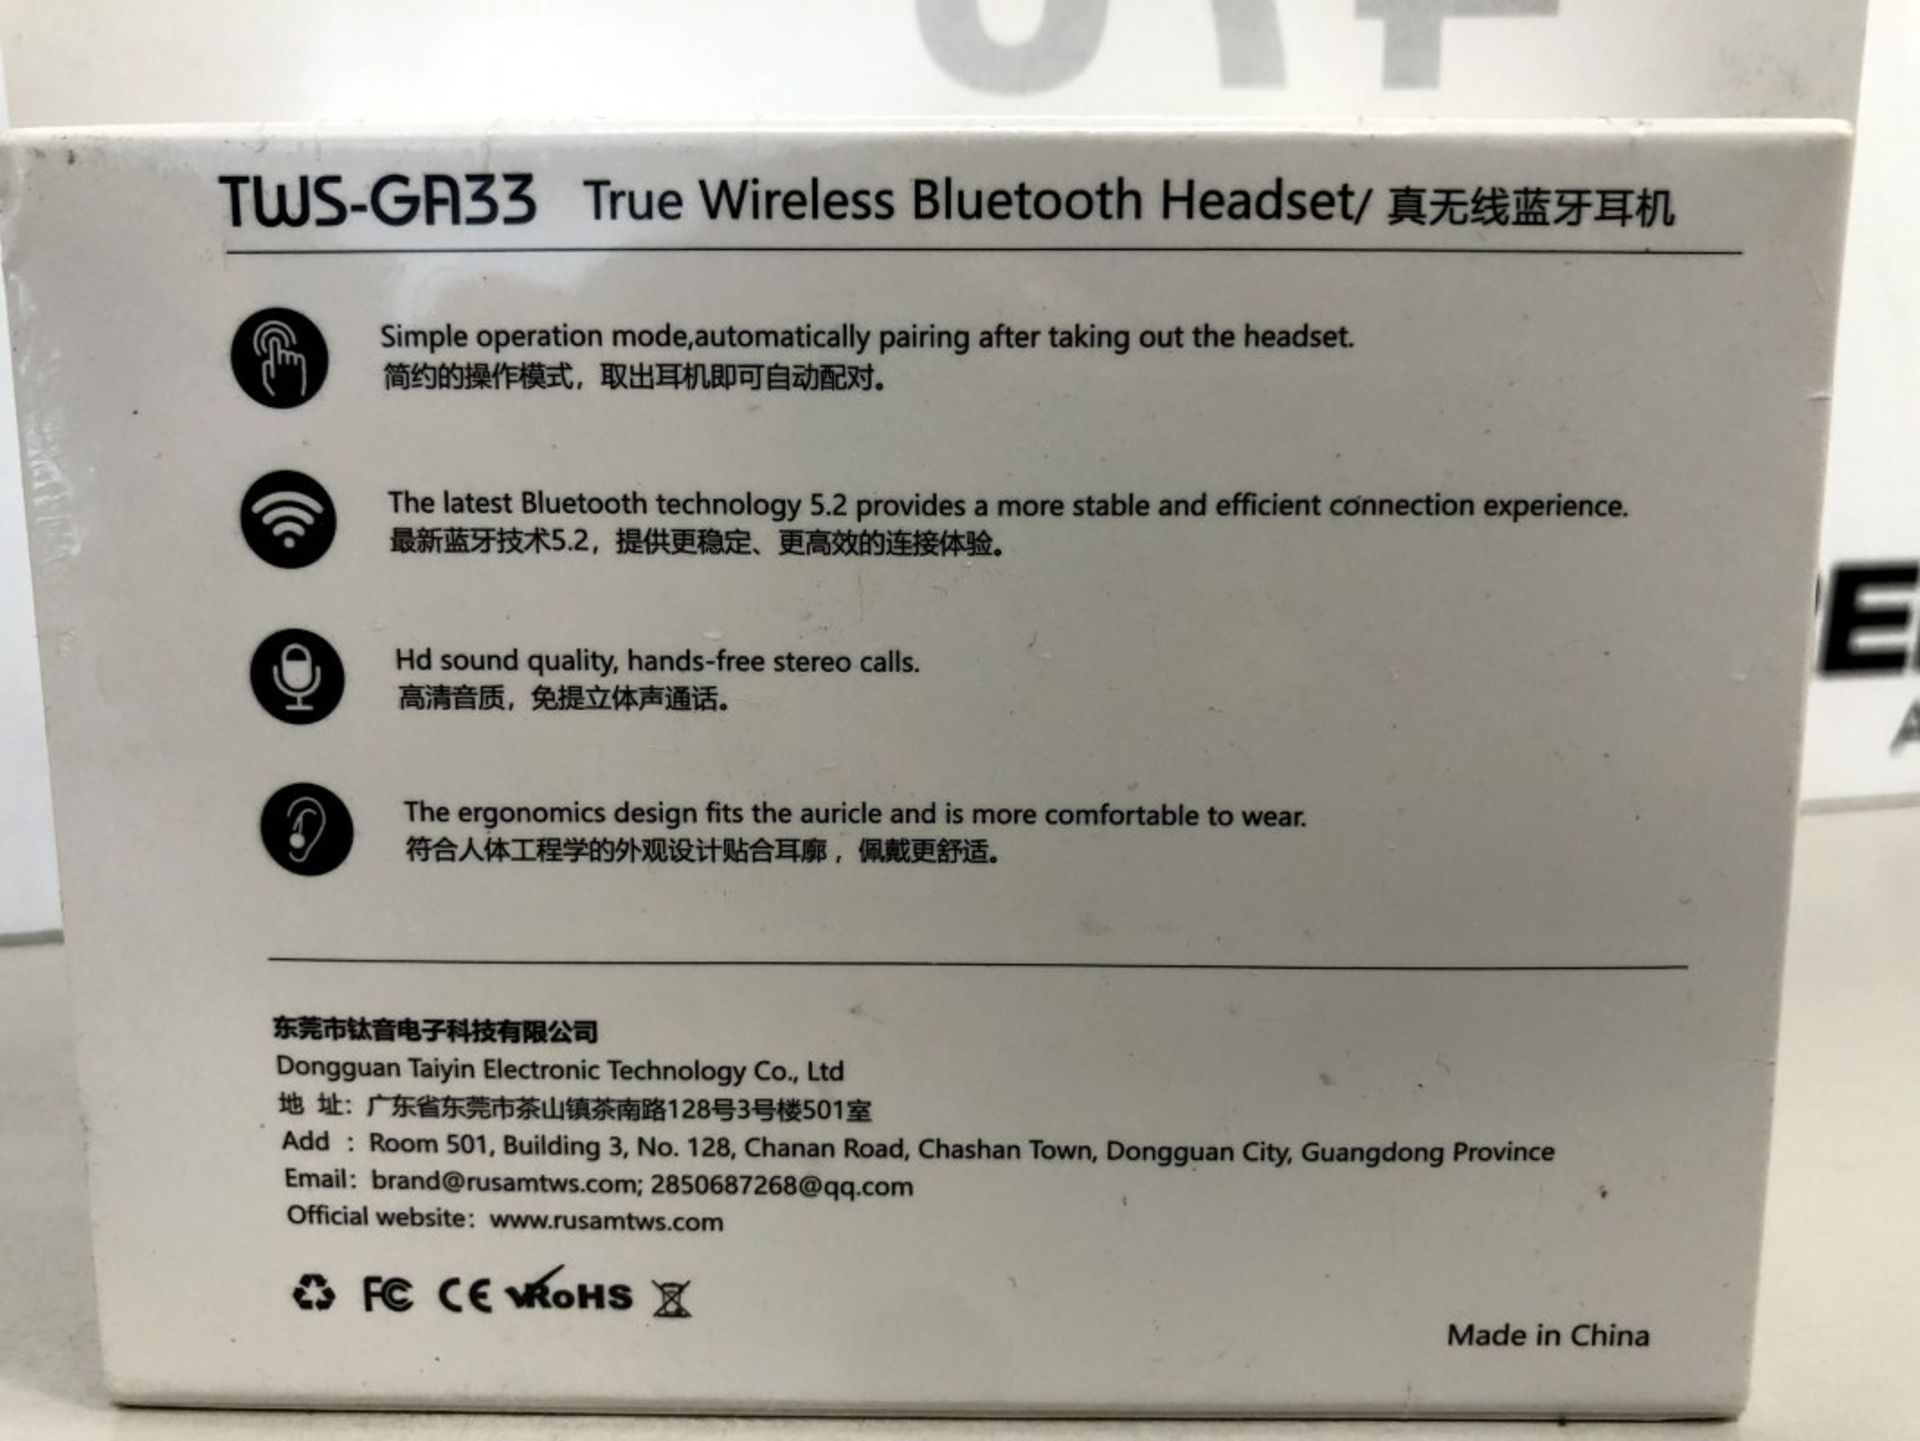 Rusam - Tws Ga33 - True Wireless Bluetooth Headset - Image 2 of 2